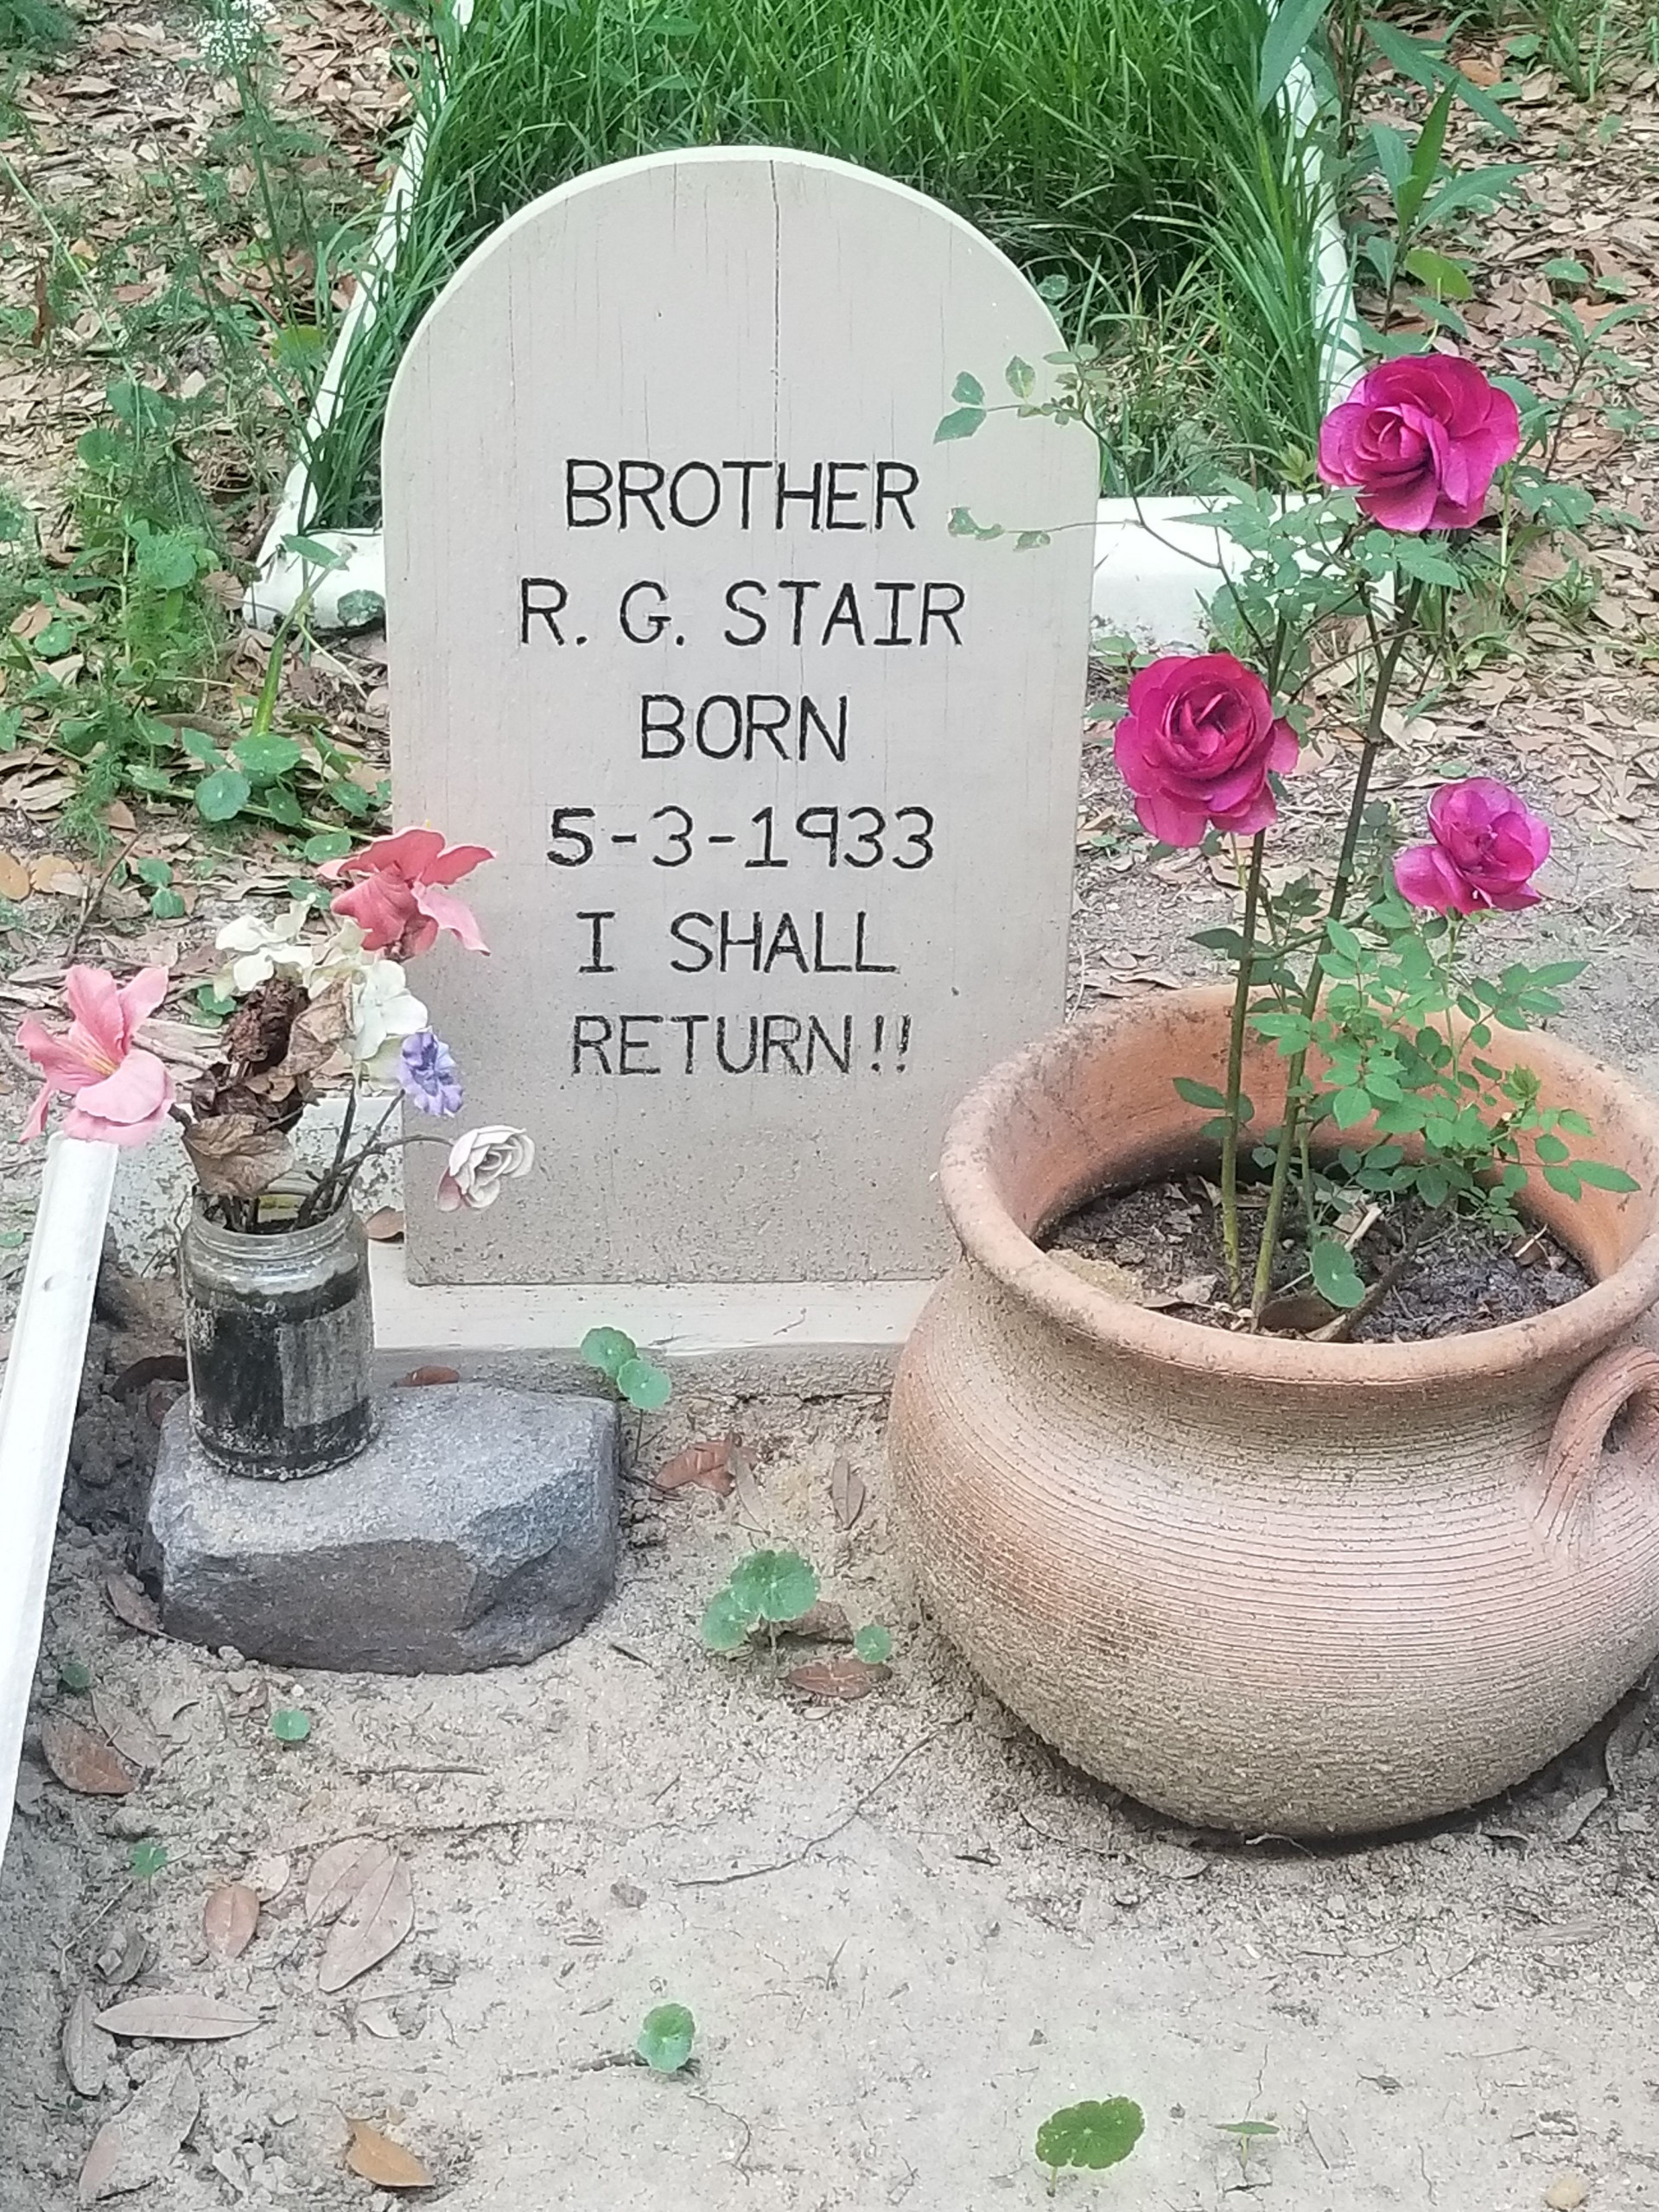 Bro Stair Grave